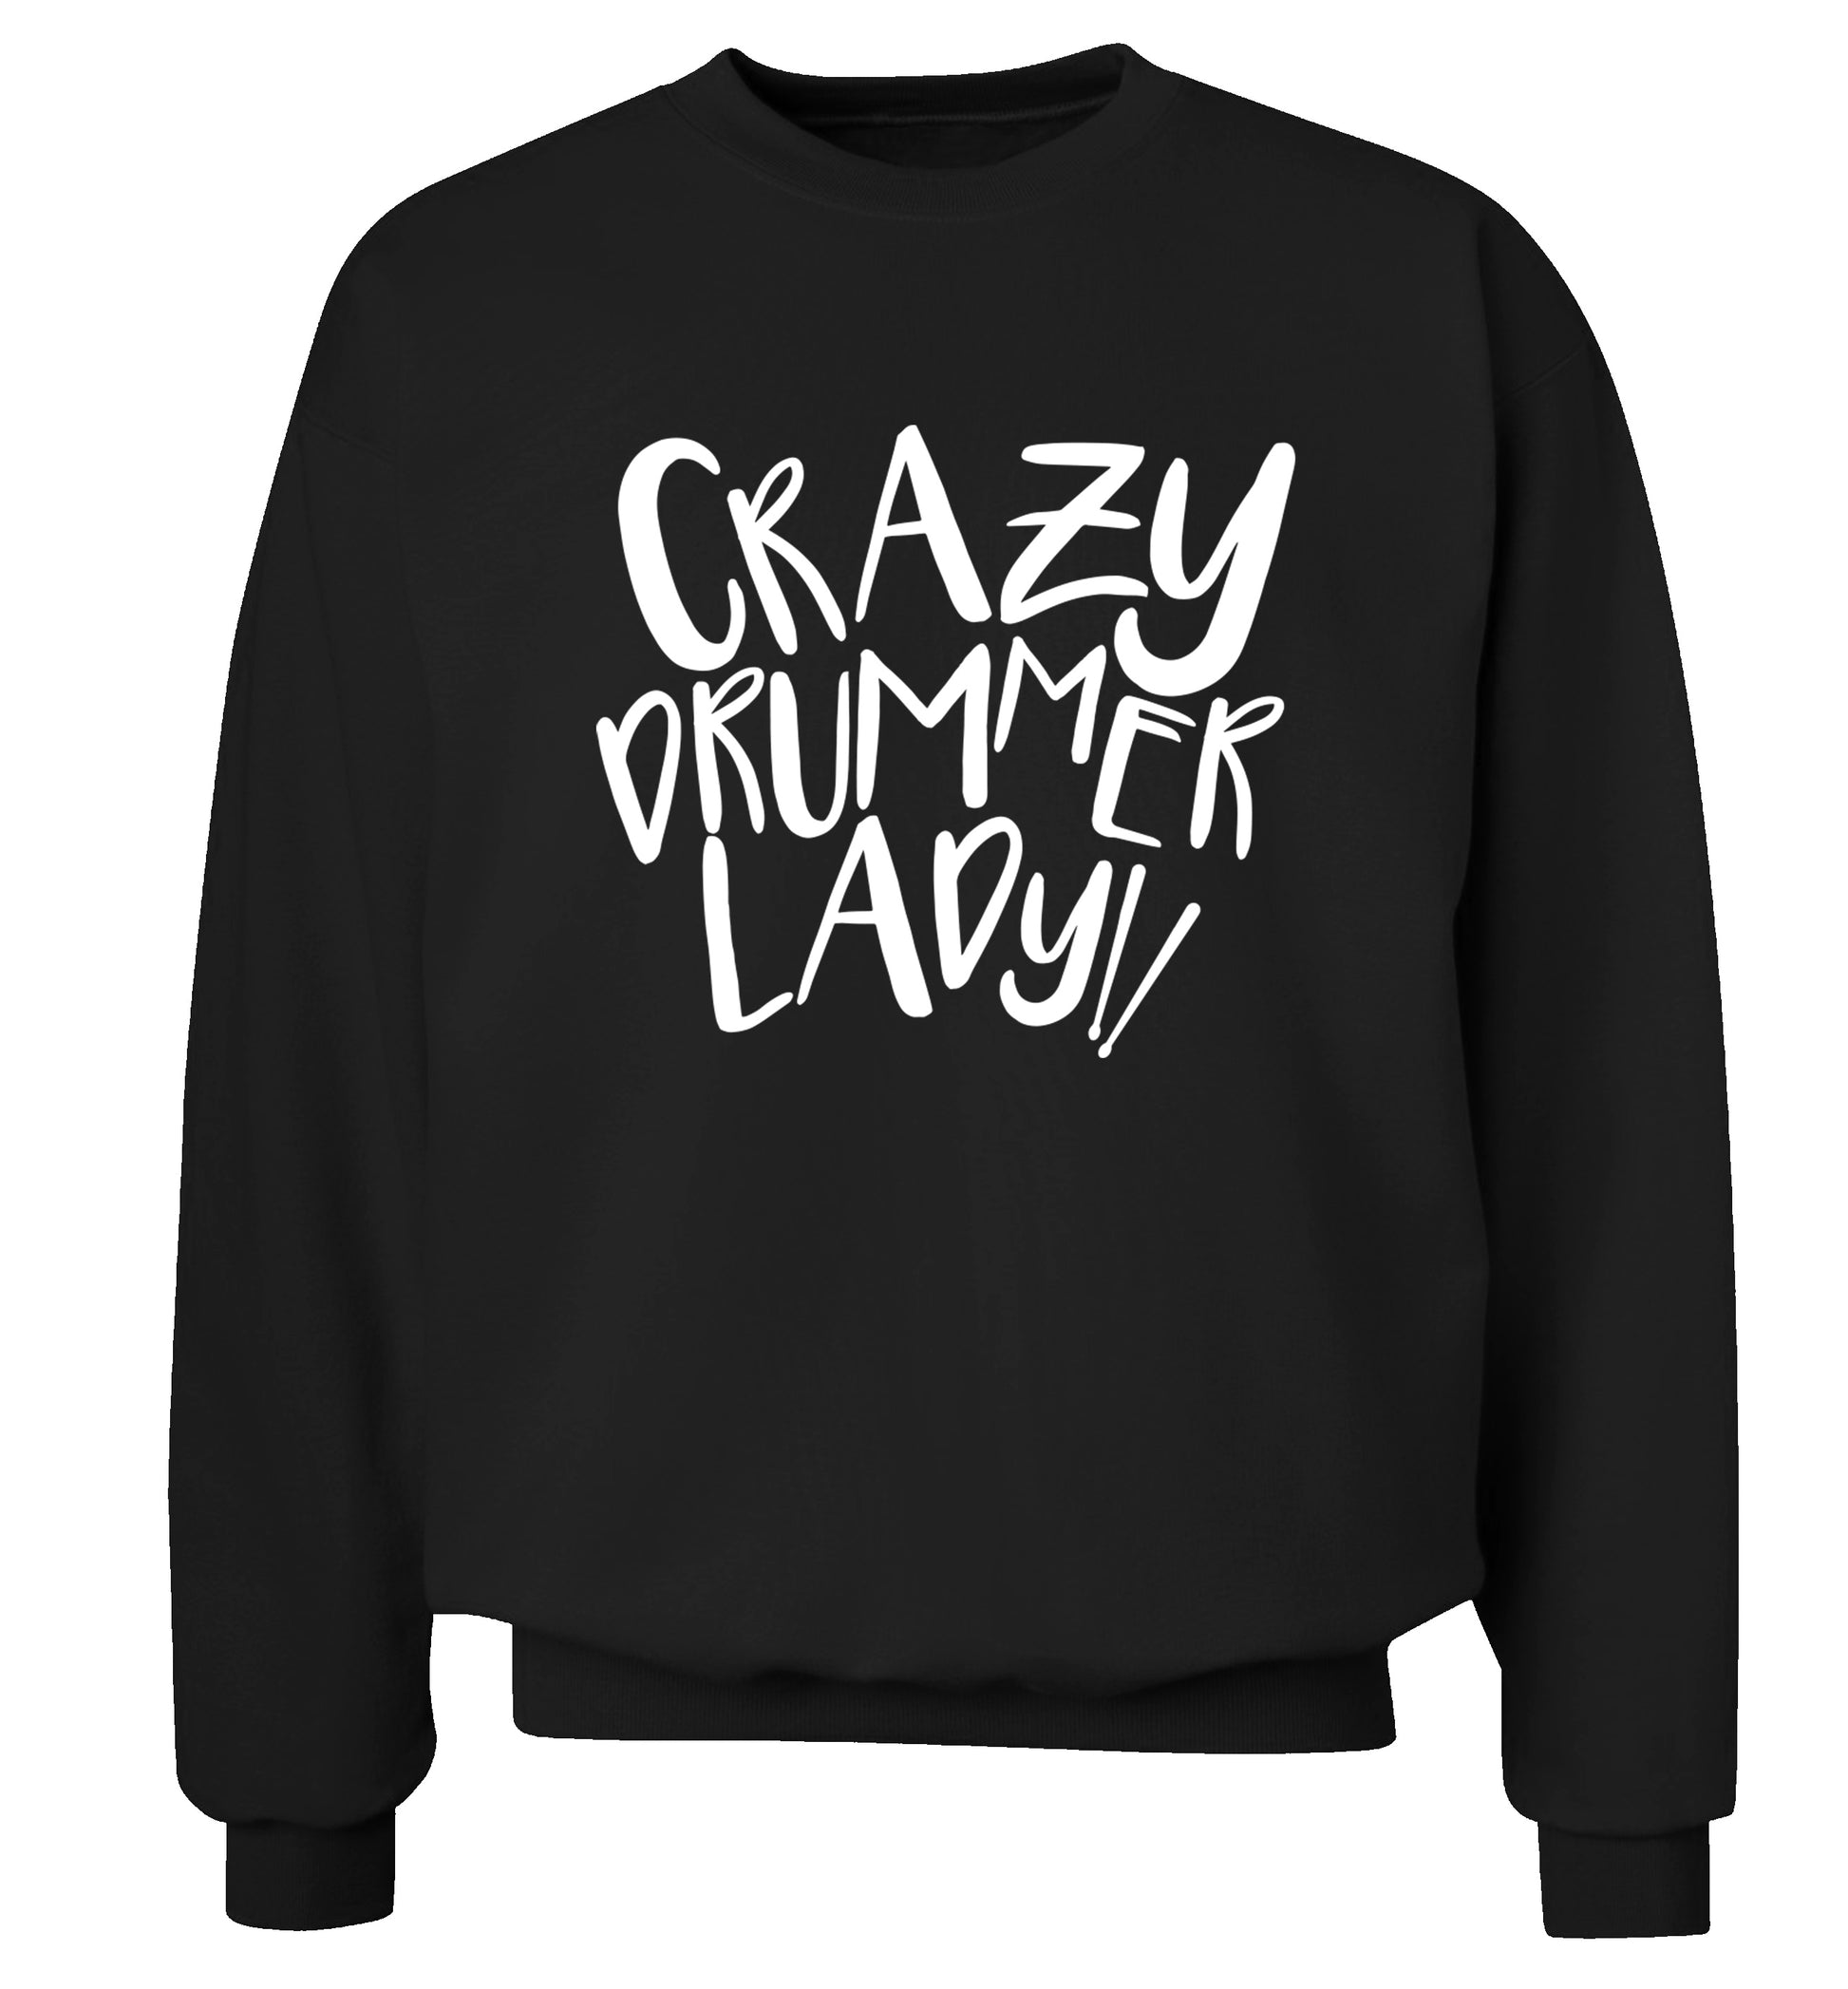 Crazy drummer lady Adult's unisex black Sweater 2XL